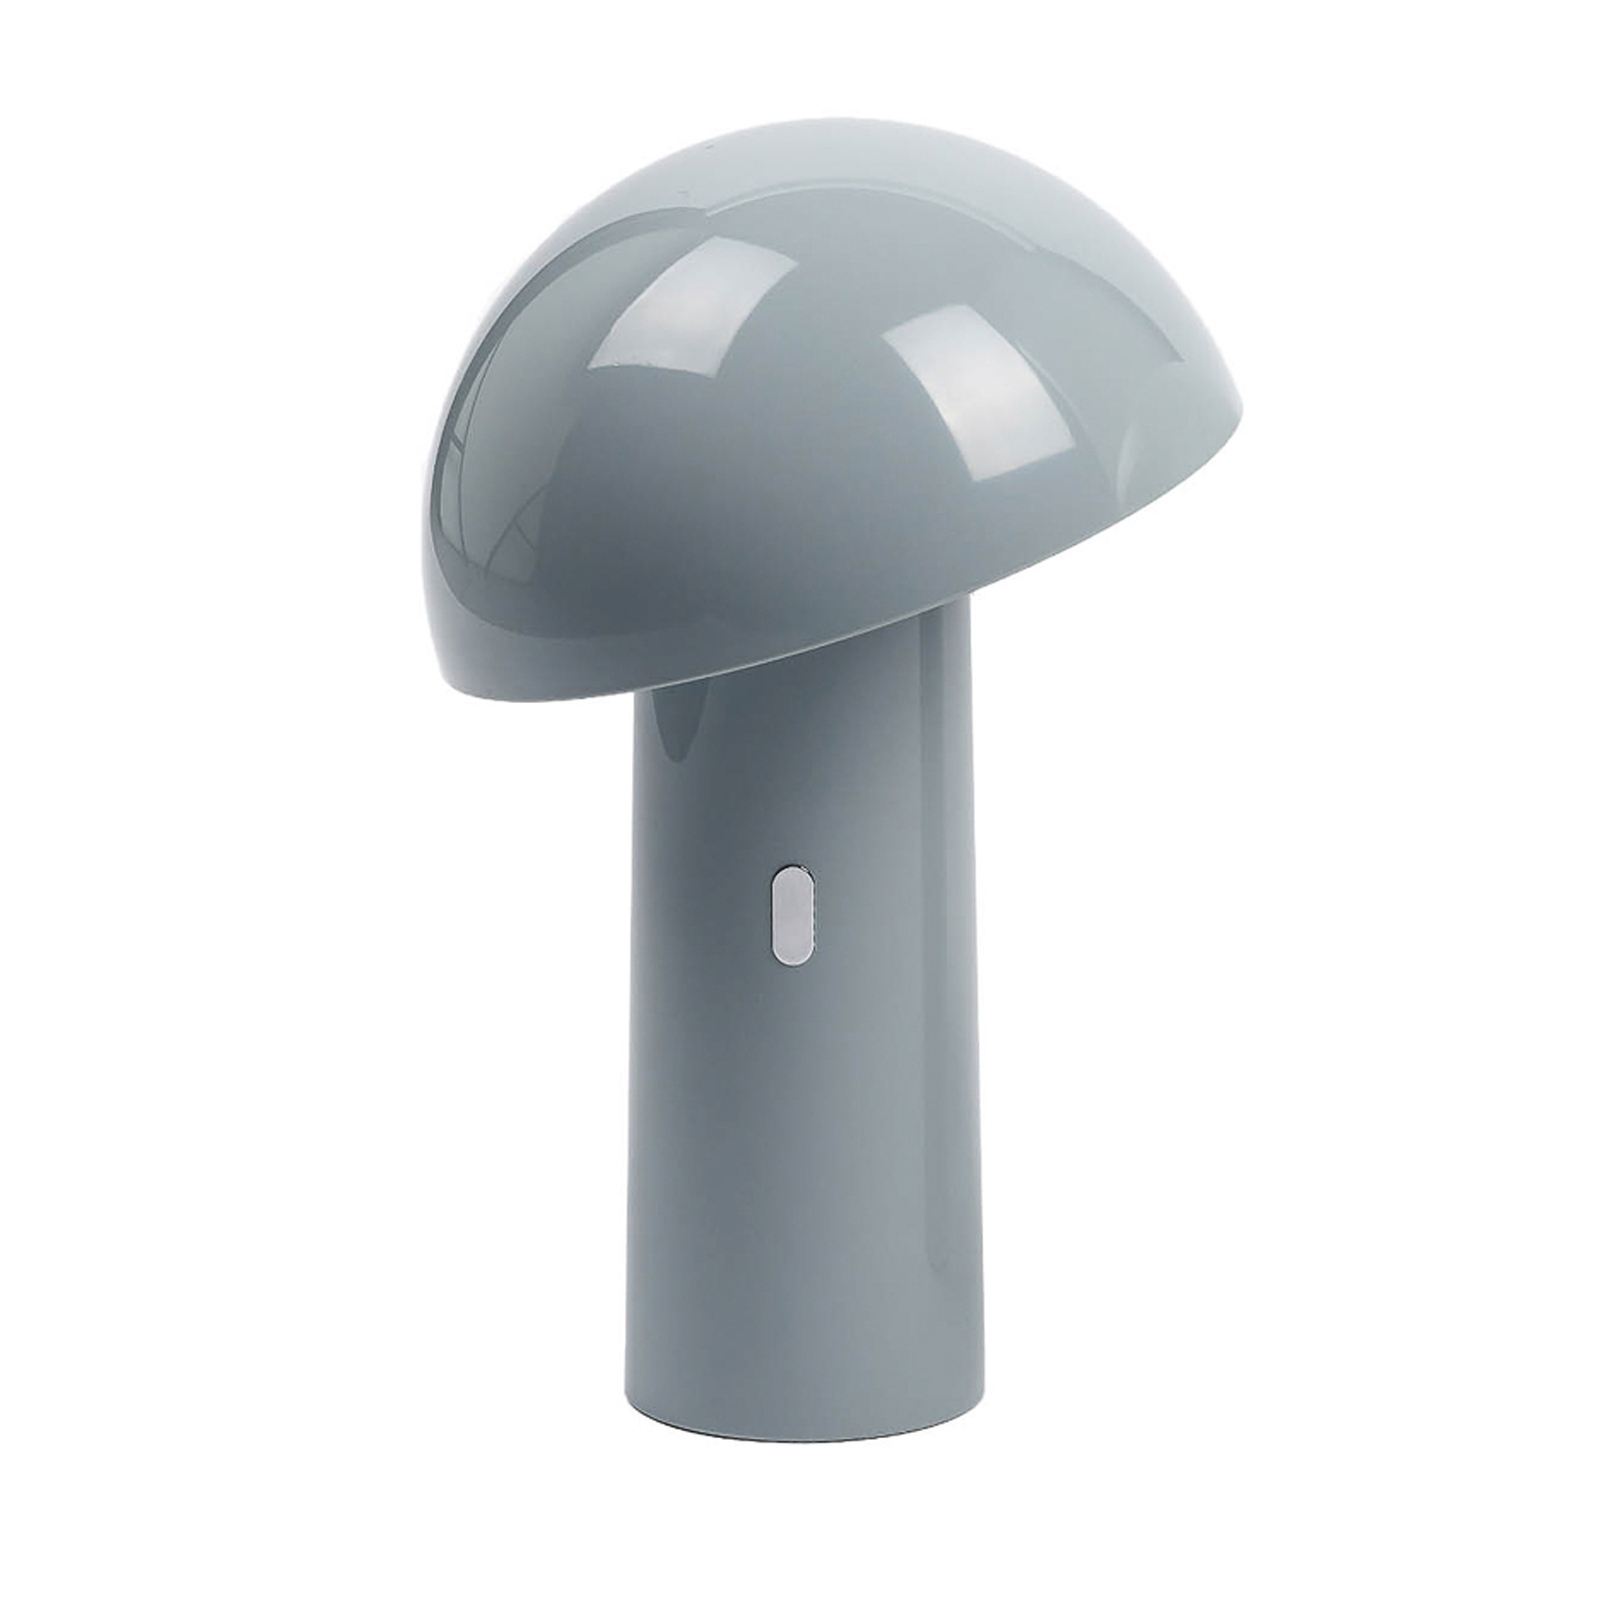 Aluminor Capsule lampe à poser LED, mobile, grise